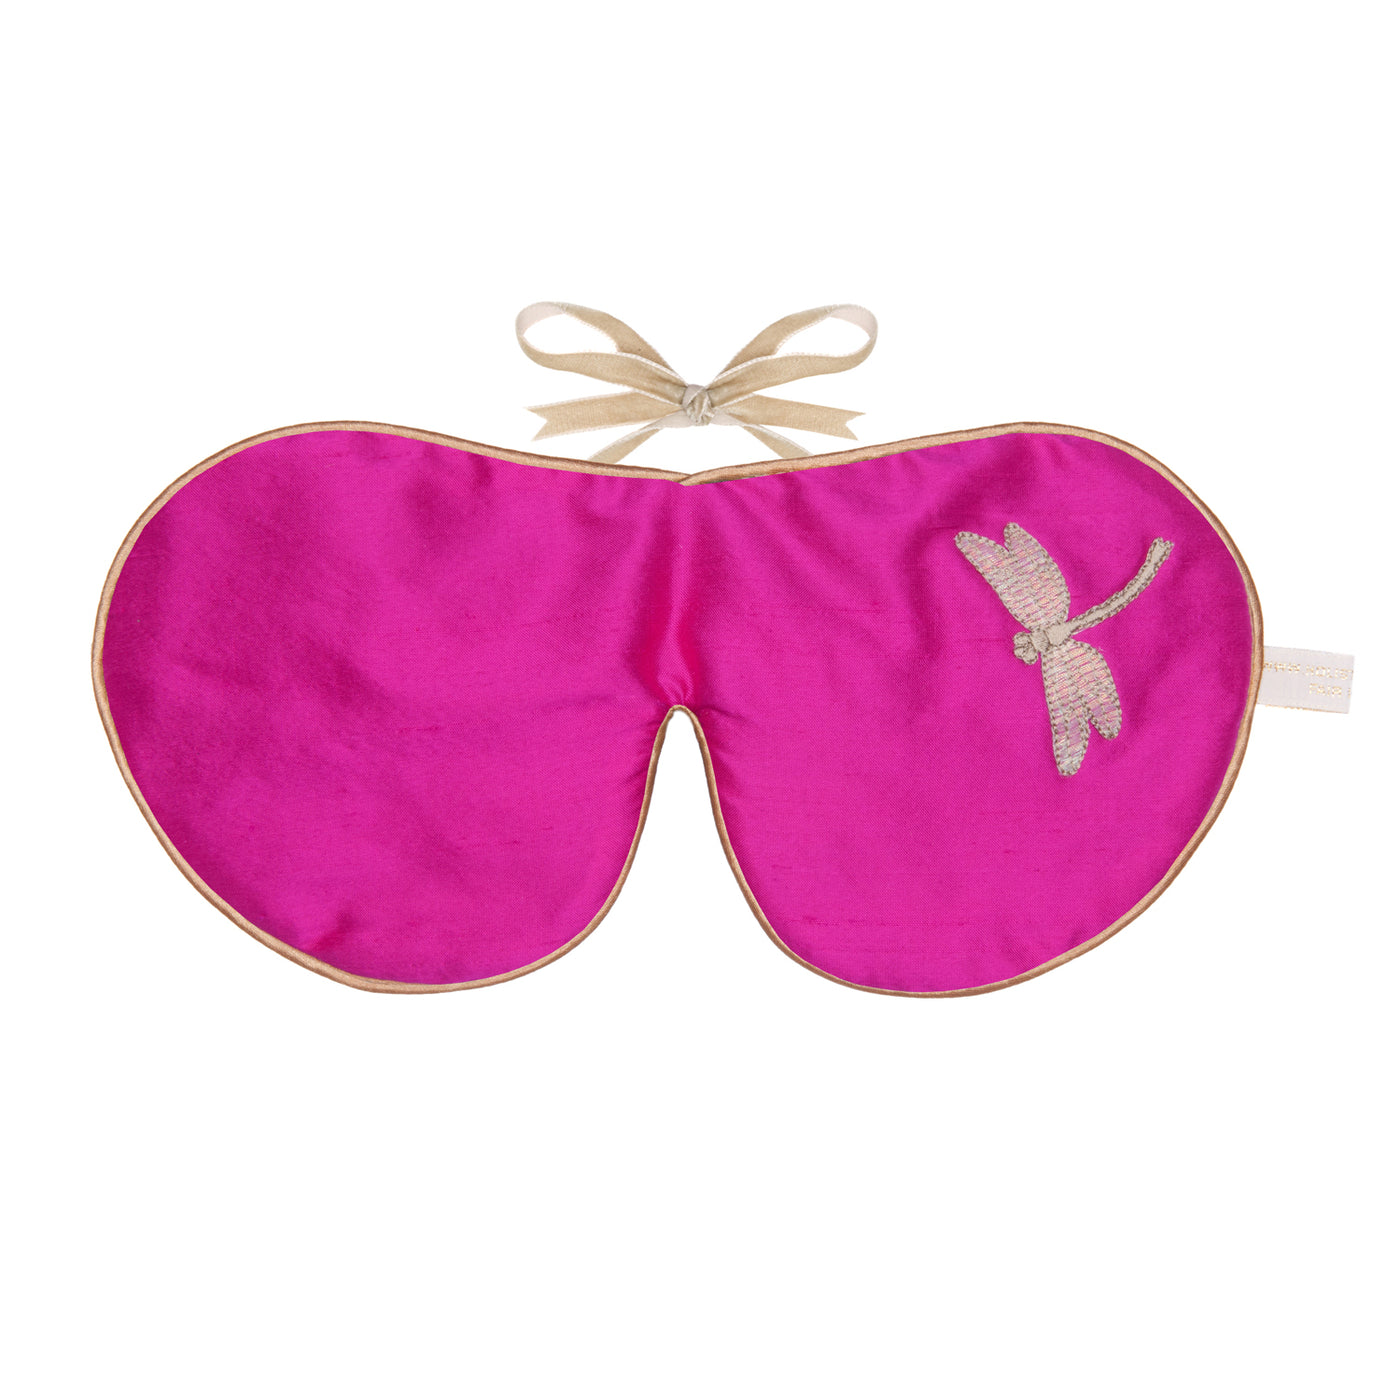 Silk & Velvet Eye Mask with Lavender in Pink Dragonfly